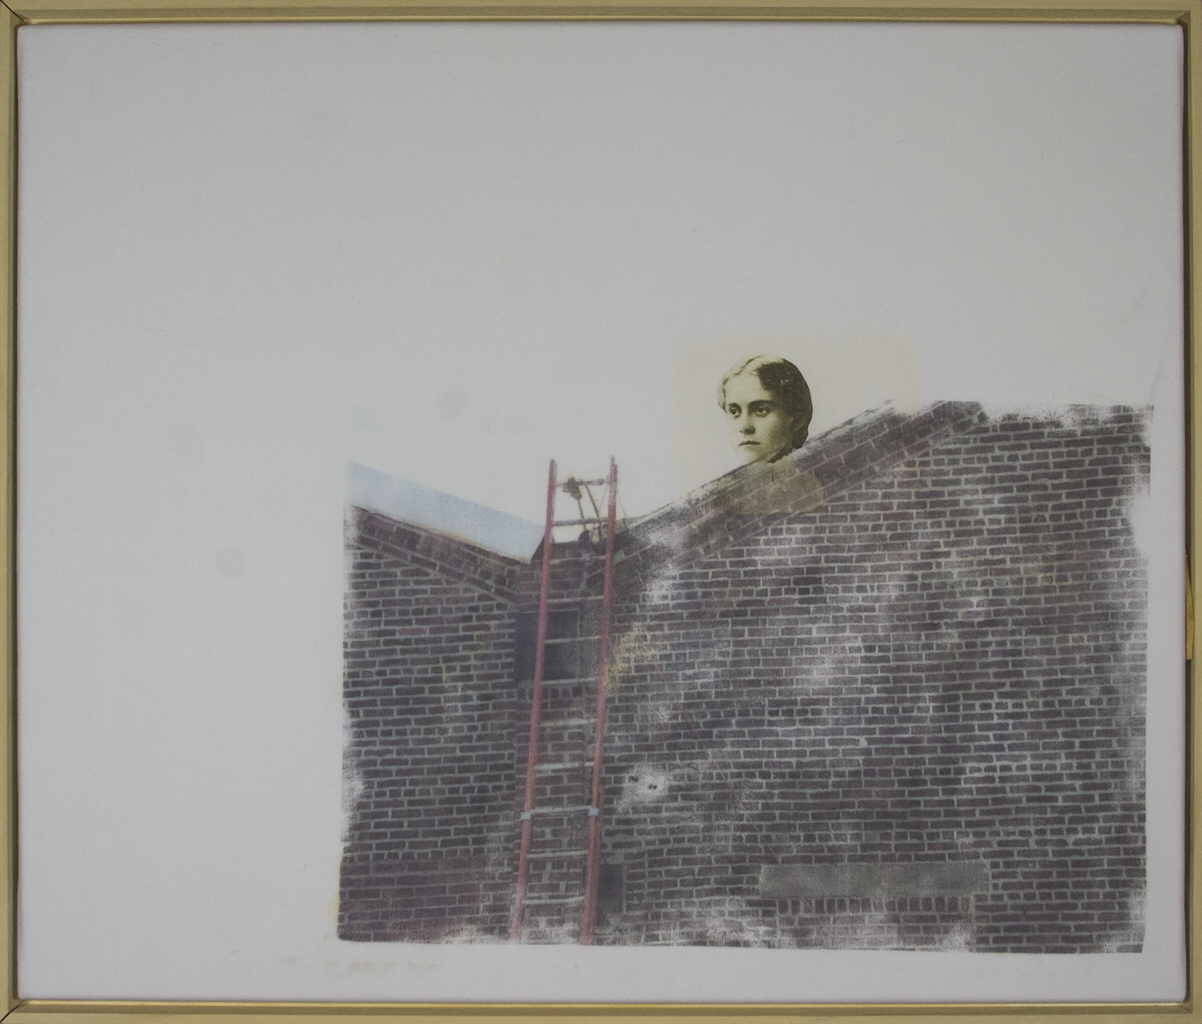 Zauner Christa 
"Escalator", 2004
Frottage / Tela
50 x 60 cm